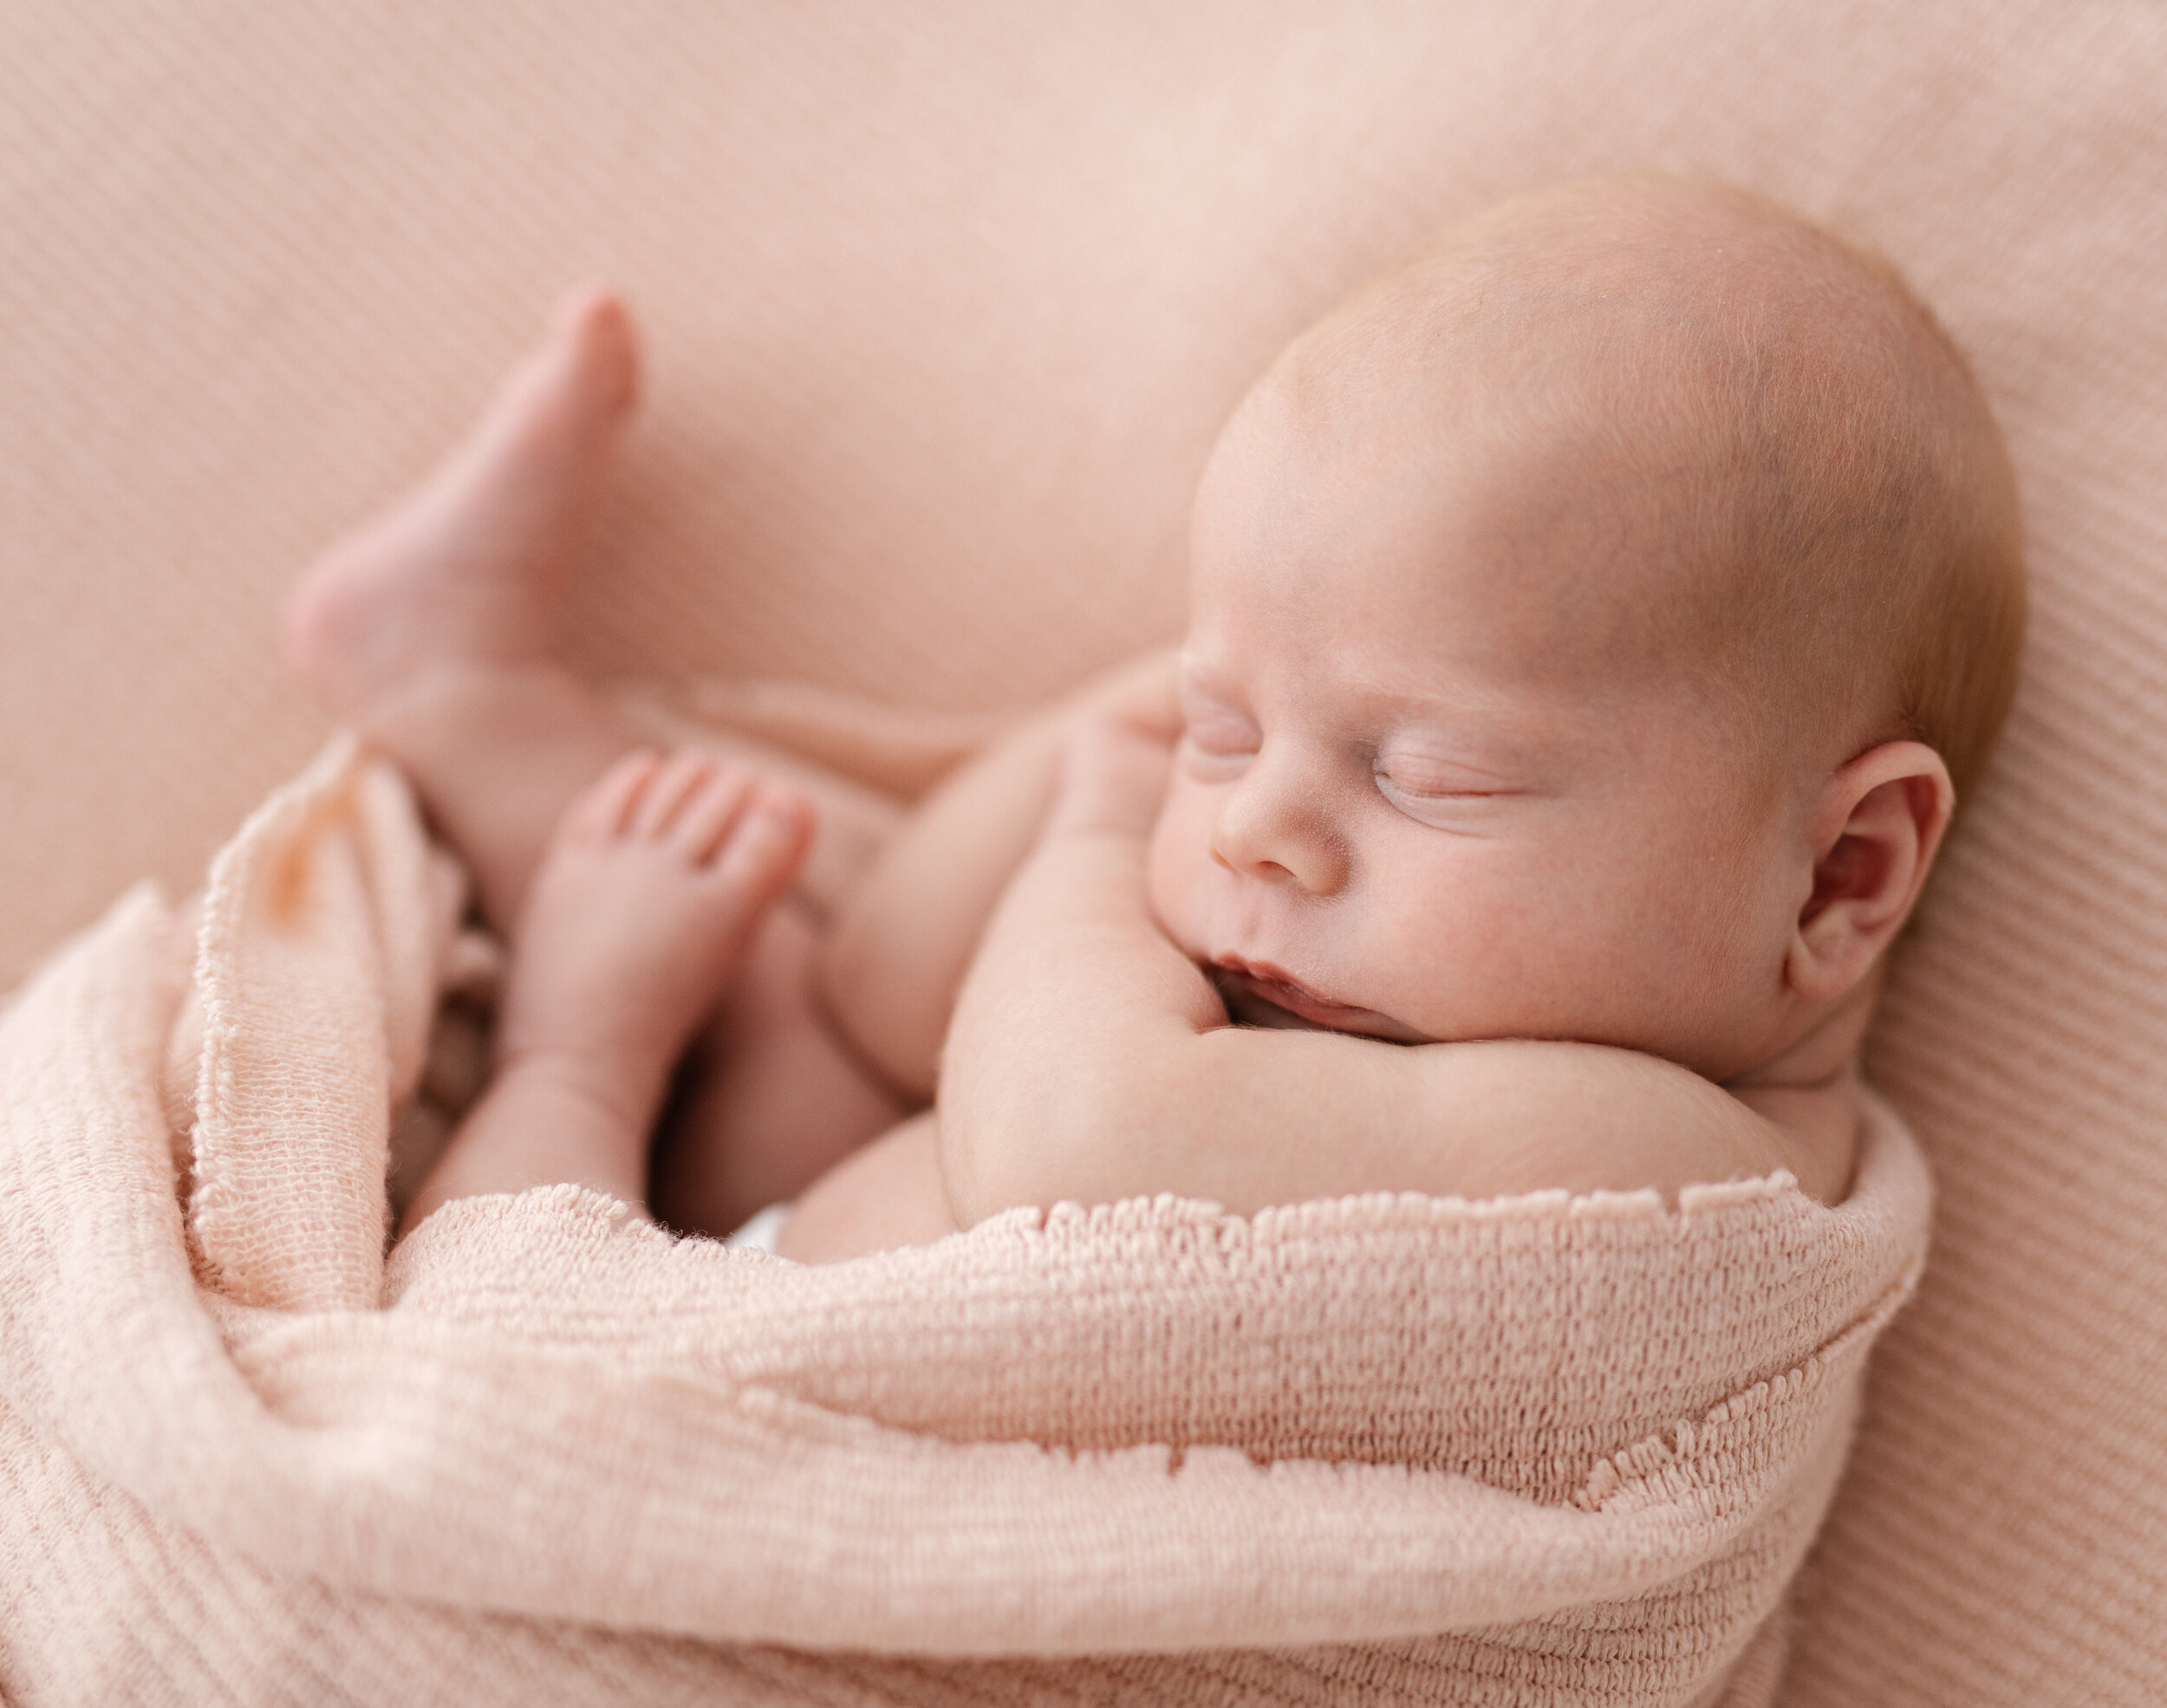 Brisbane newborn baby photographed cuddled in a soft pink blanket 